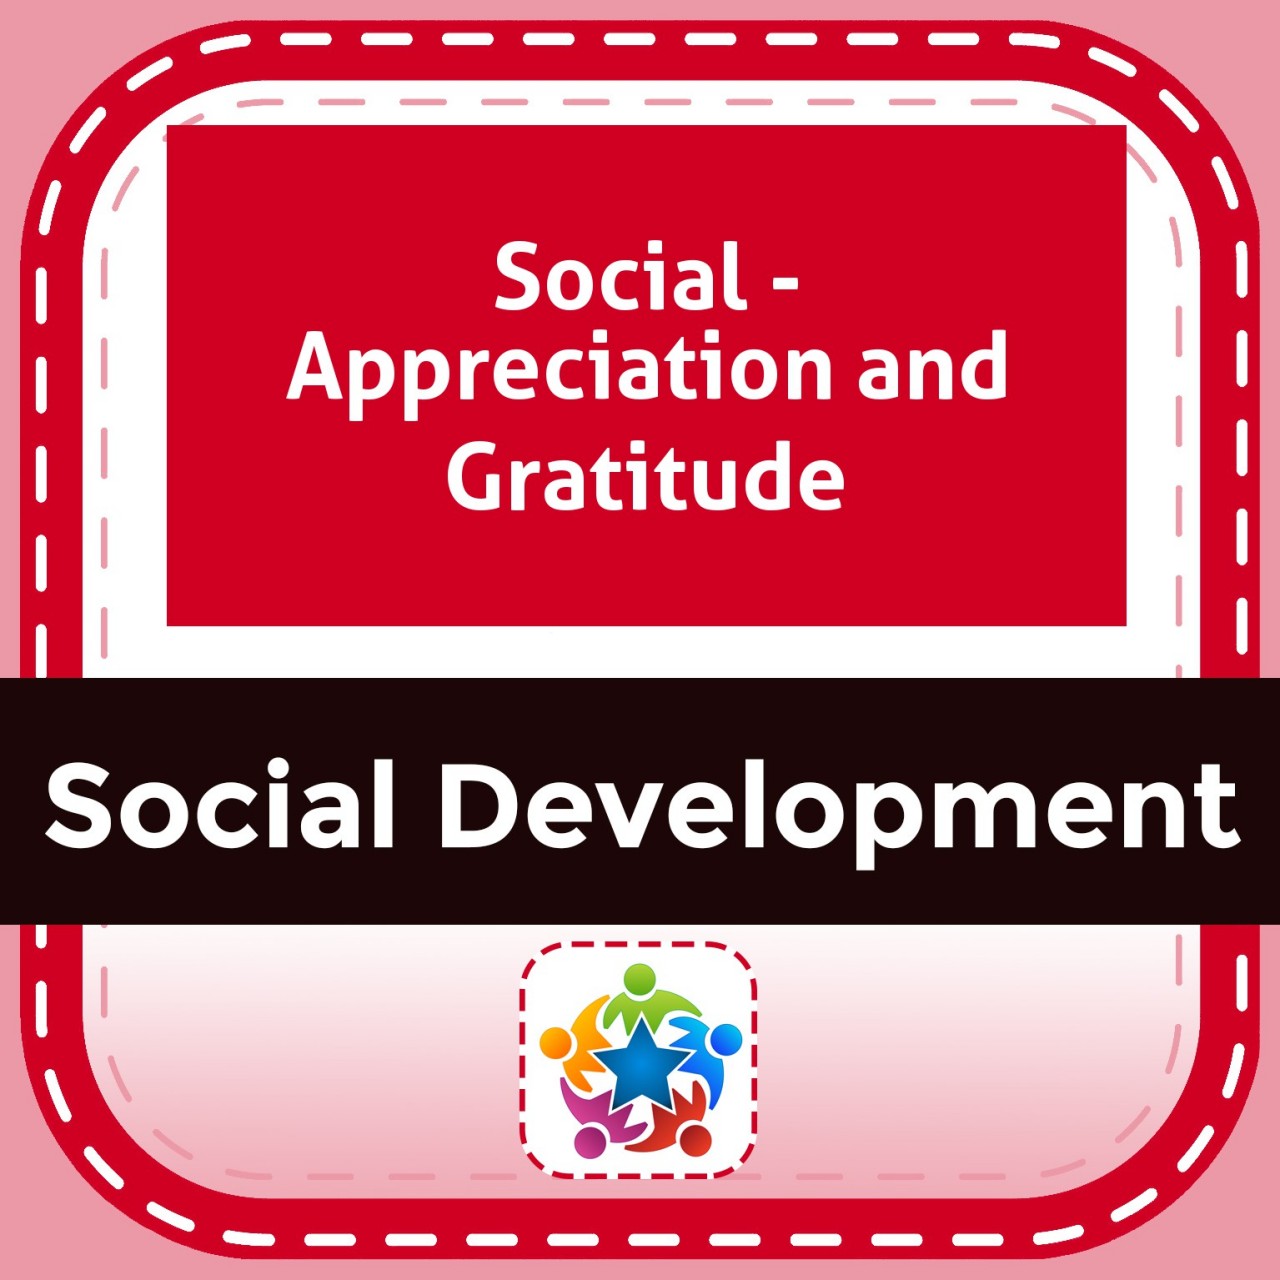 Social - Appreciation and Gratitude